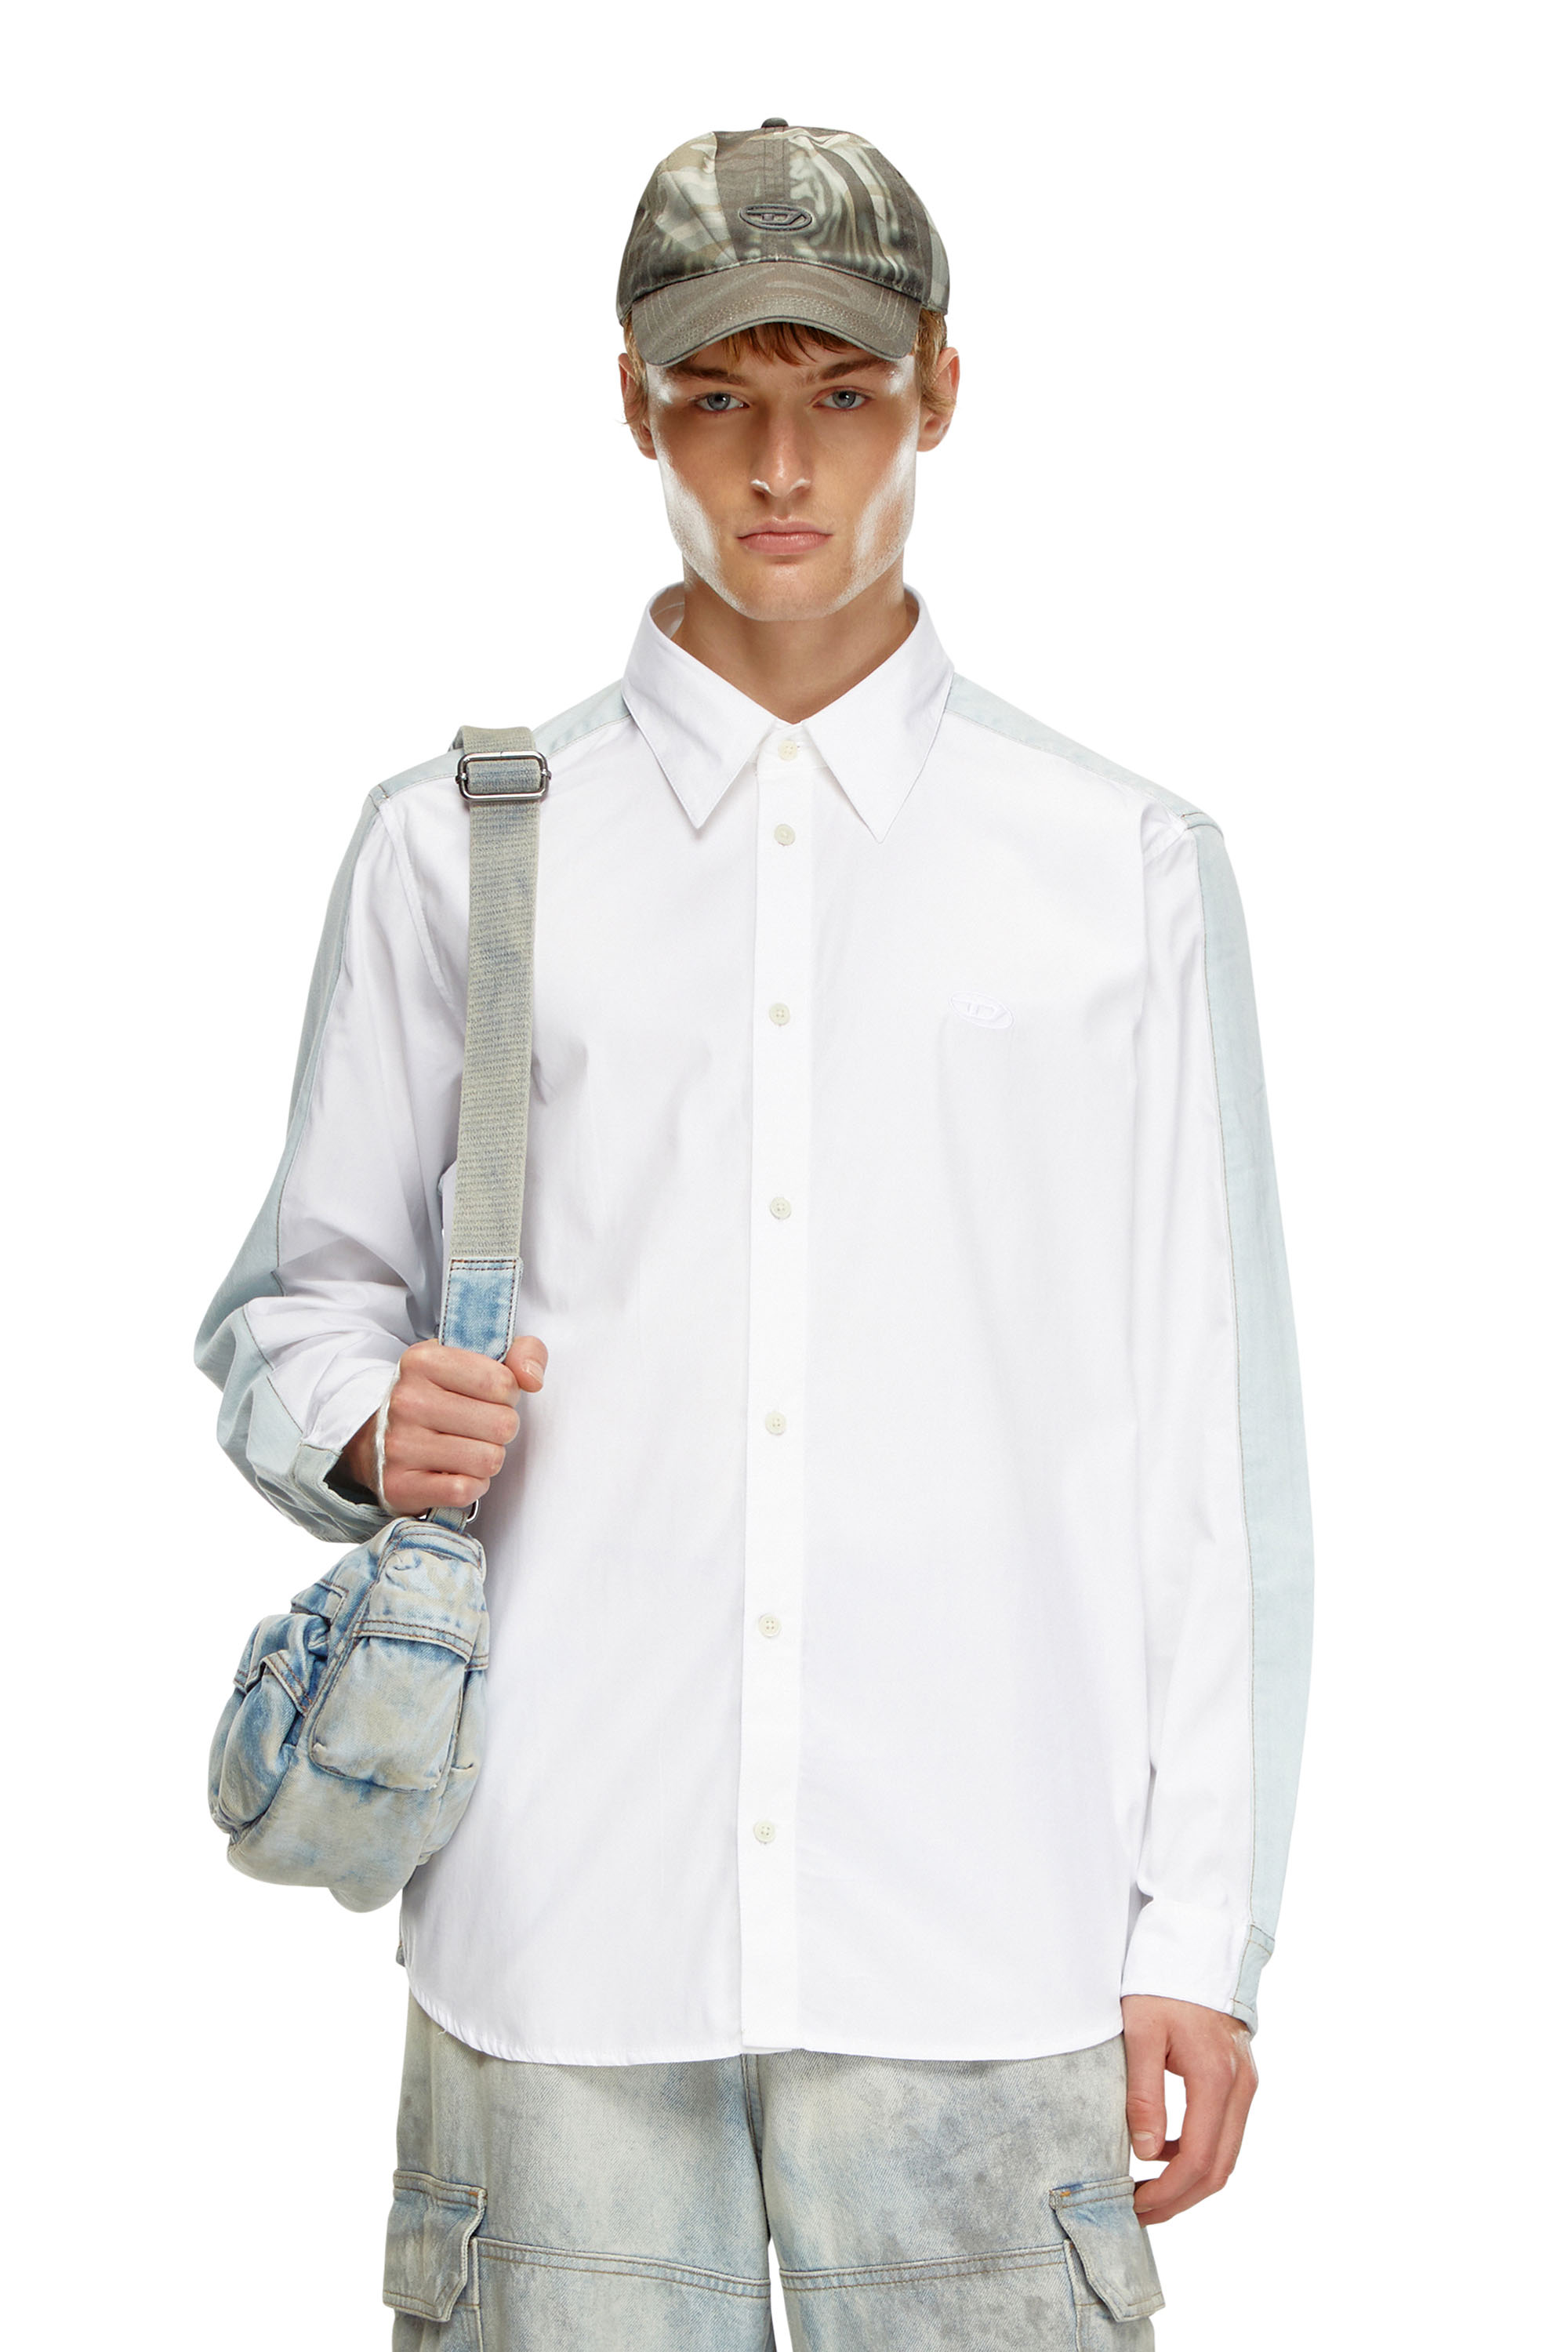 Diesel - S-SIMPLY-DNM, Male Shirt in cotton poplin and denim in マルチカラー - Image 1